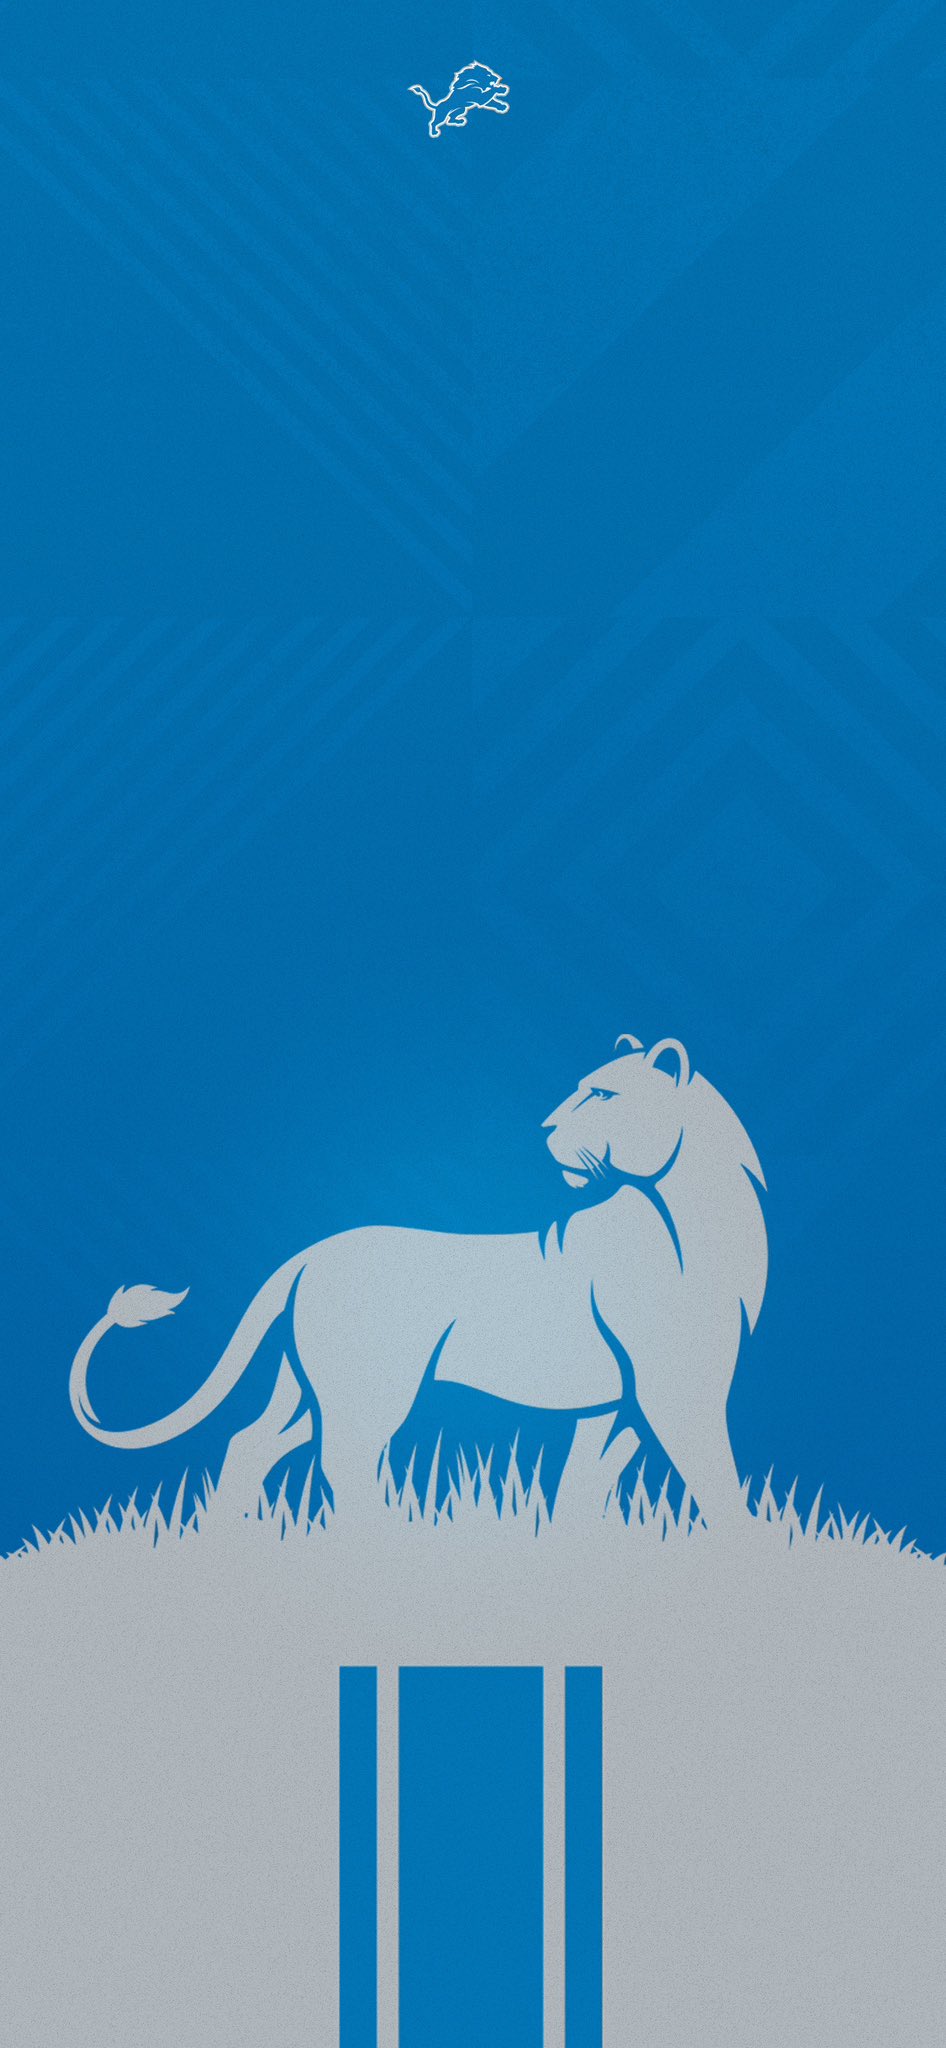 detroit lions logo wallpaper